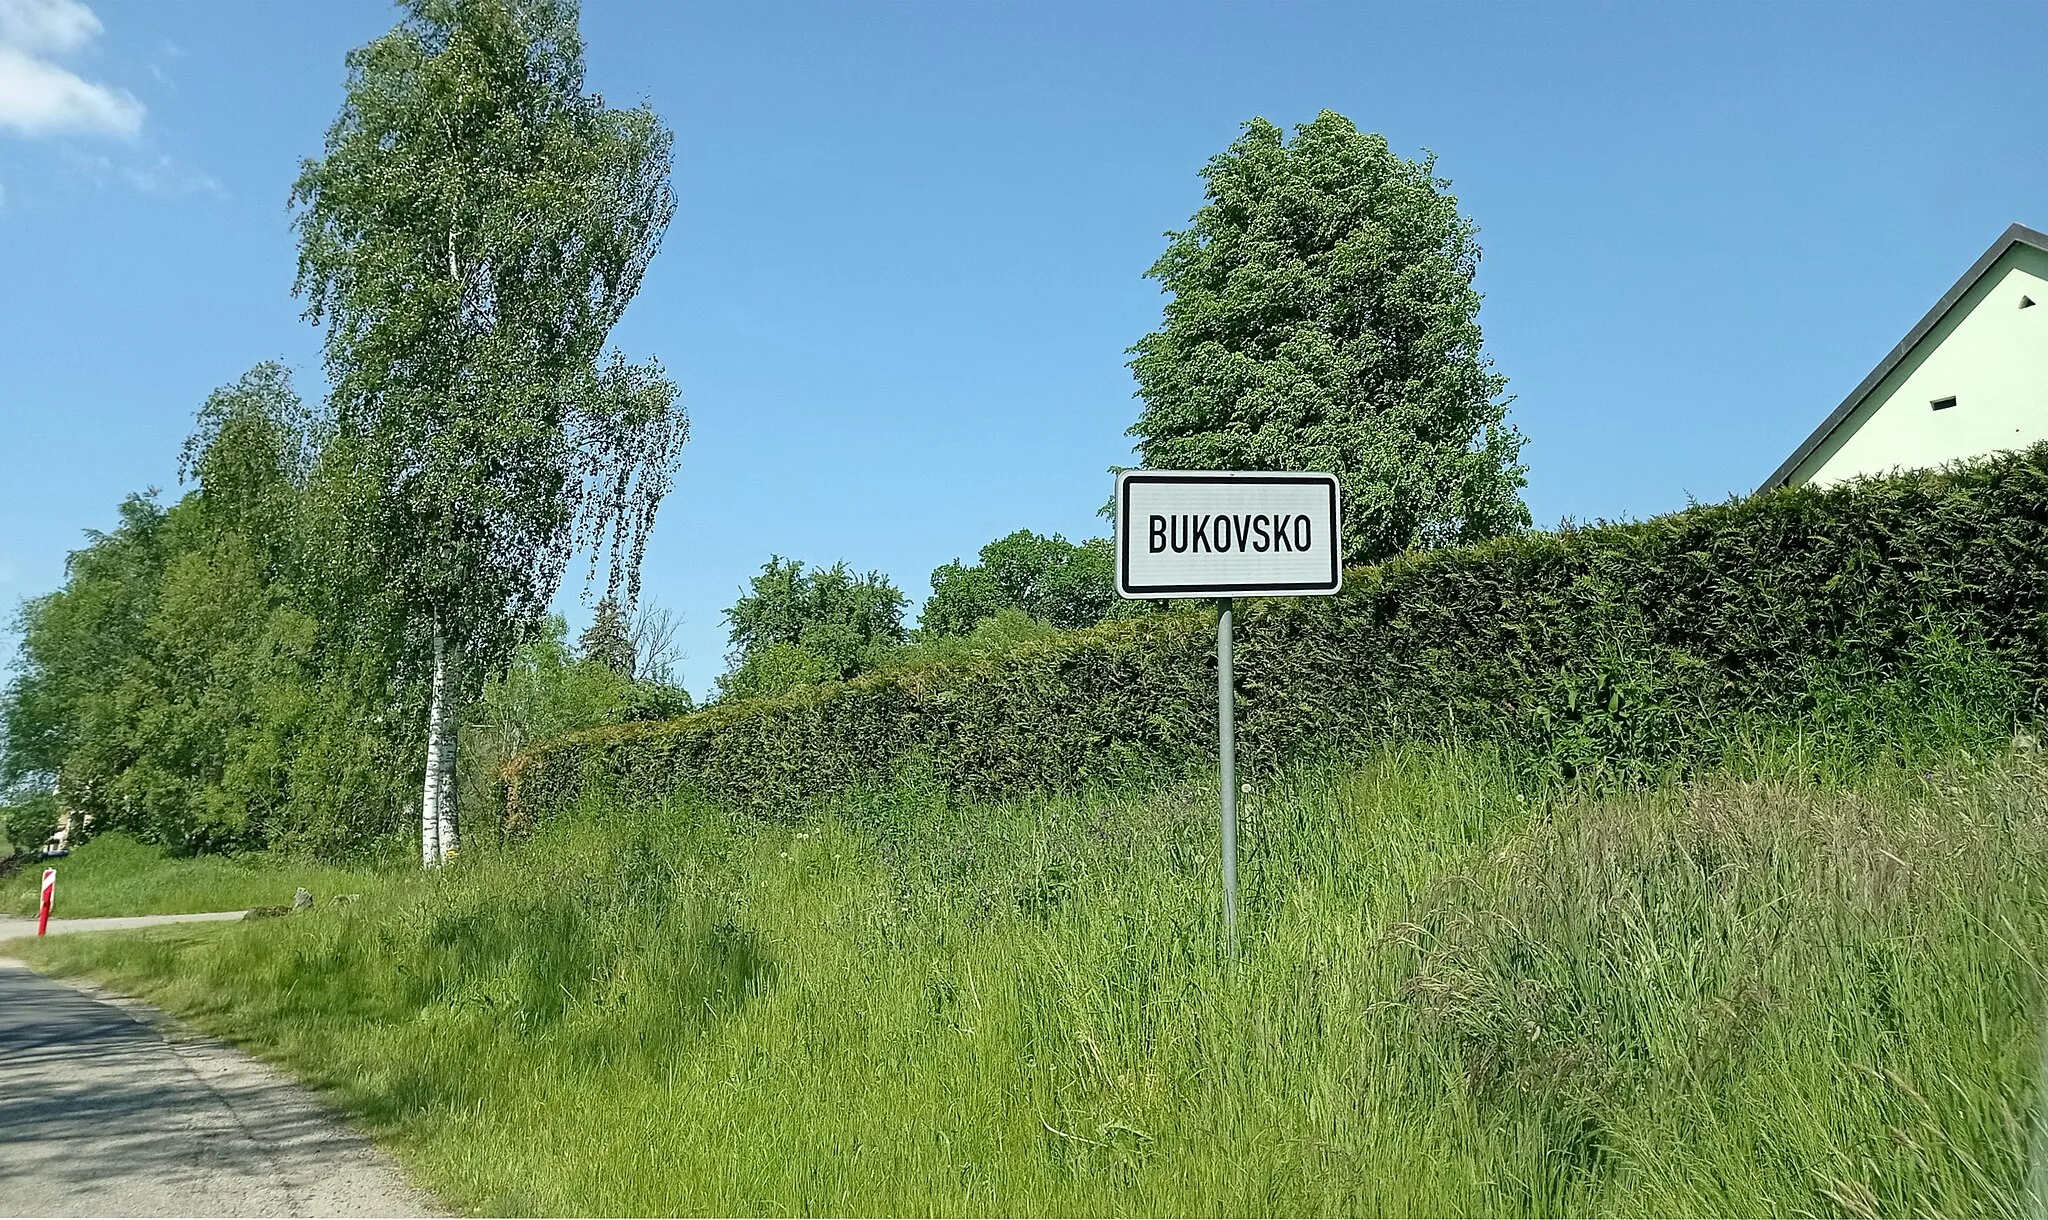 Photo showing: Municipal border sign in the village of Bukovsko, part of the municipality of Malonty, South Bohemian Region, Czechia